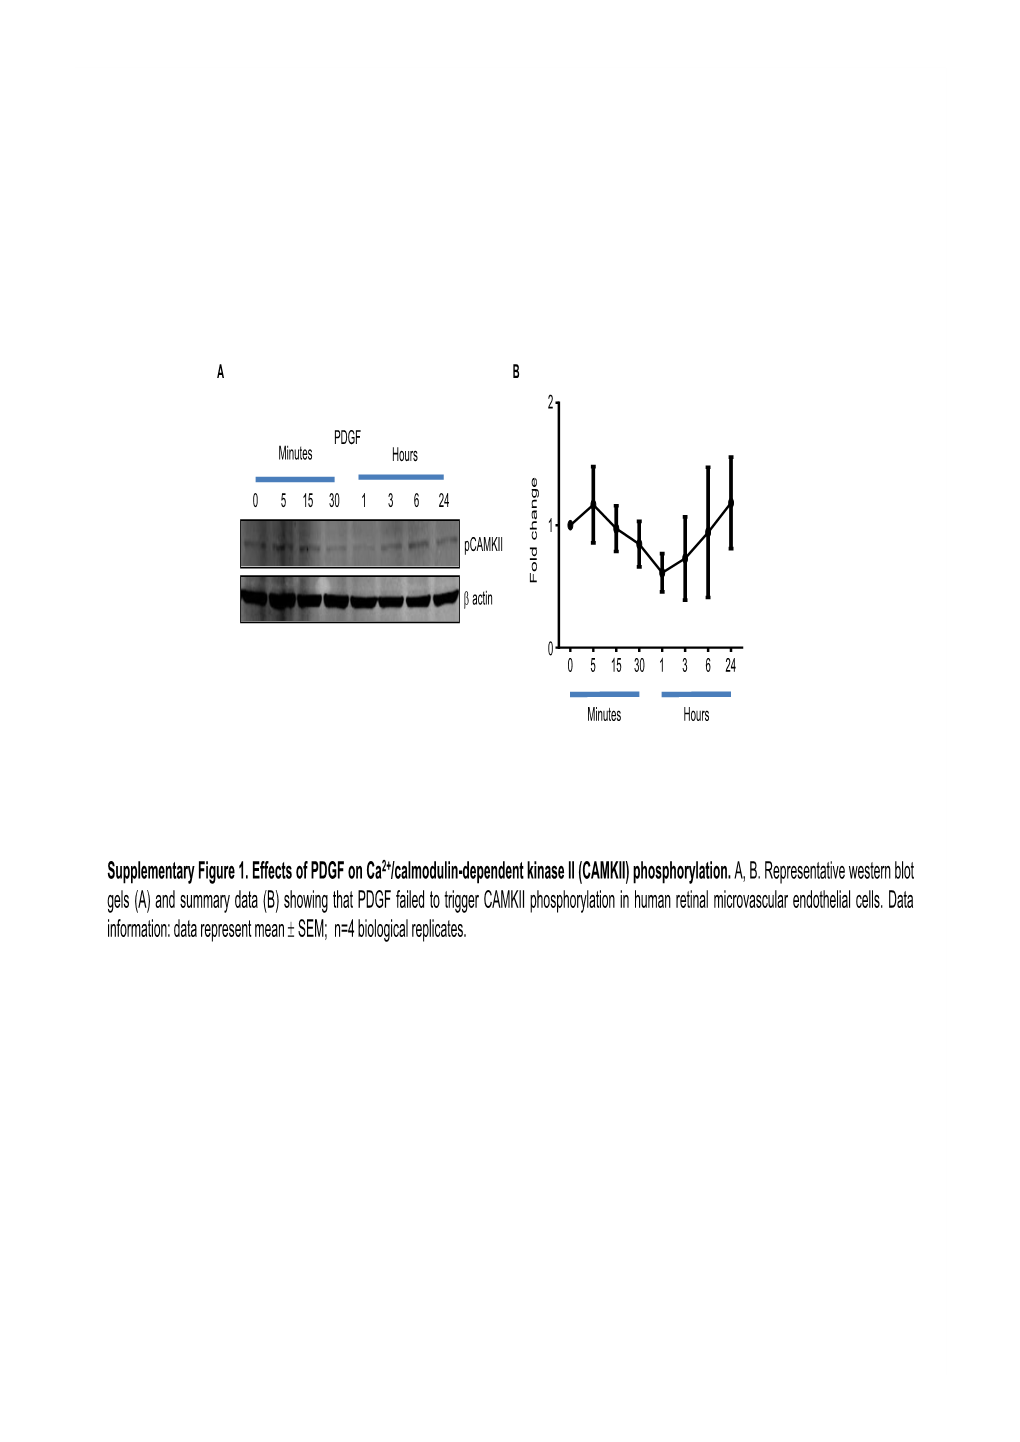 Supplementary Figure 1. Effects of PDGF on Ca 2+/Calmodulin-Dependent Kinase II (CAMKII) Phosphorylation. A, B. Representative